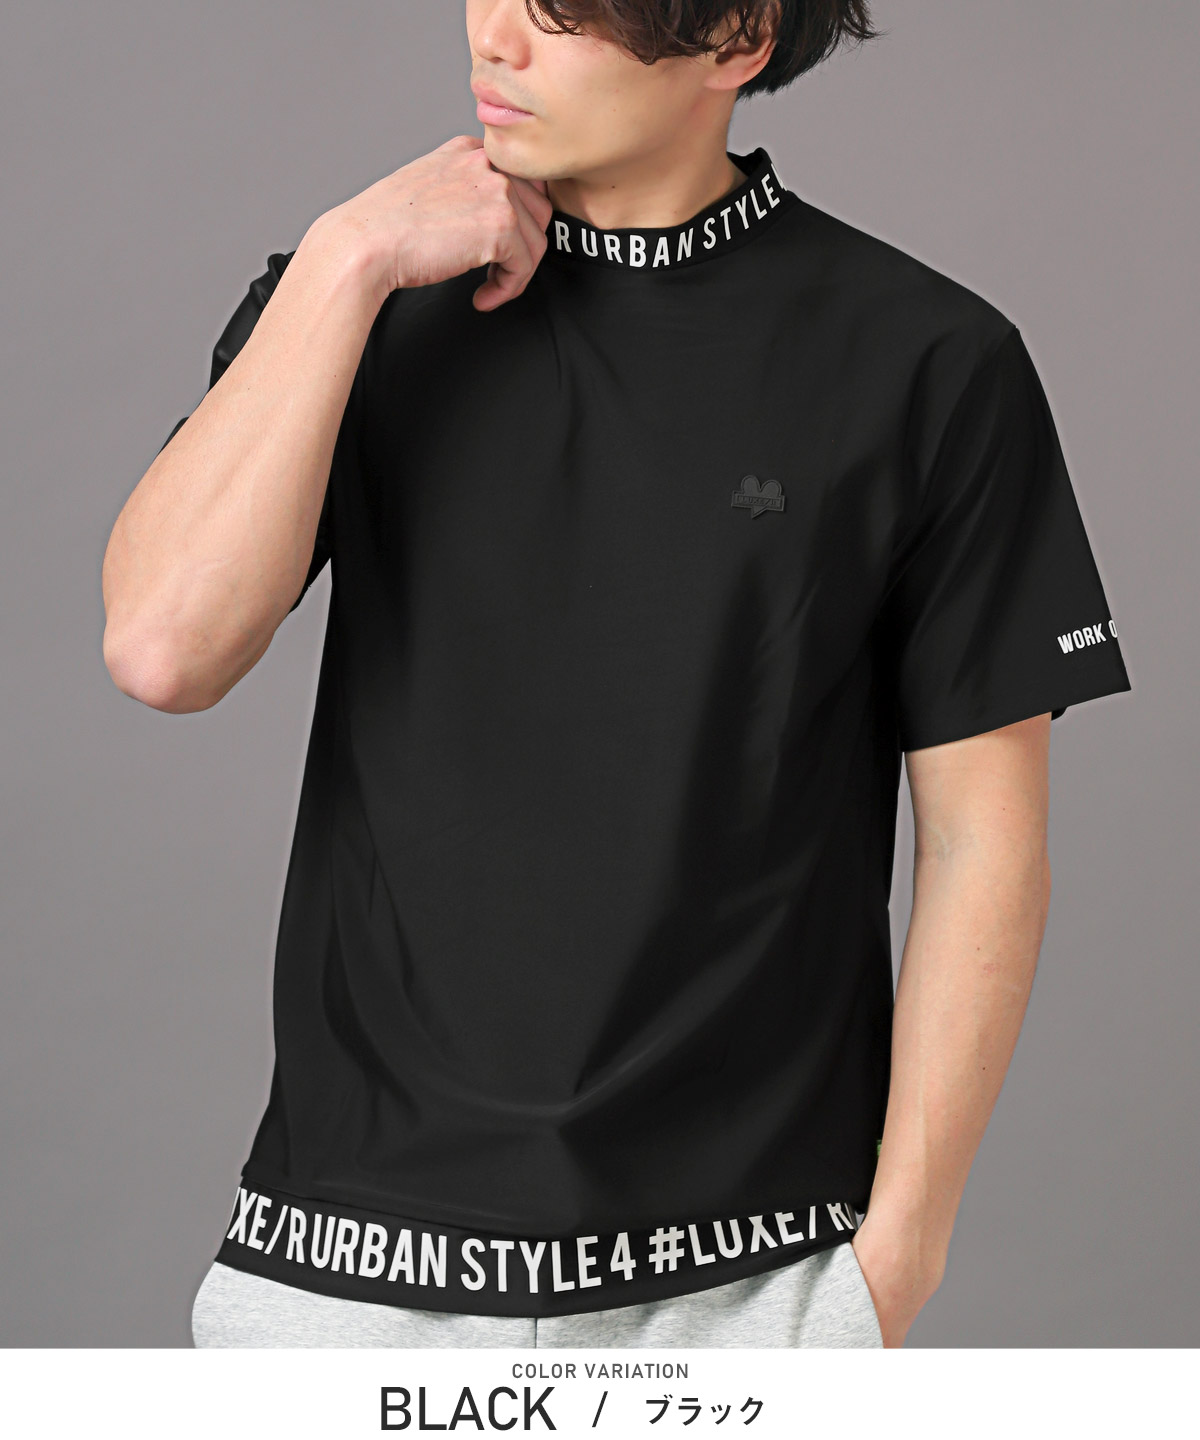 Tシャツ メンズ モックネック ゴルフウェア ロゴ ストレッチ 伸縮 接触冷感 速乾 半袖